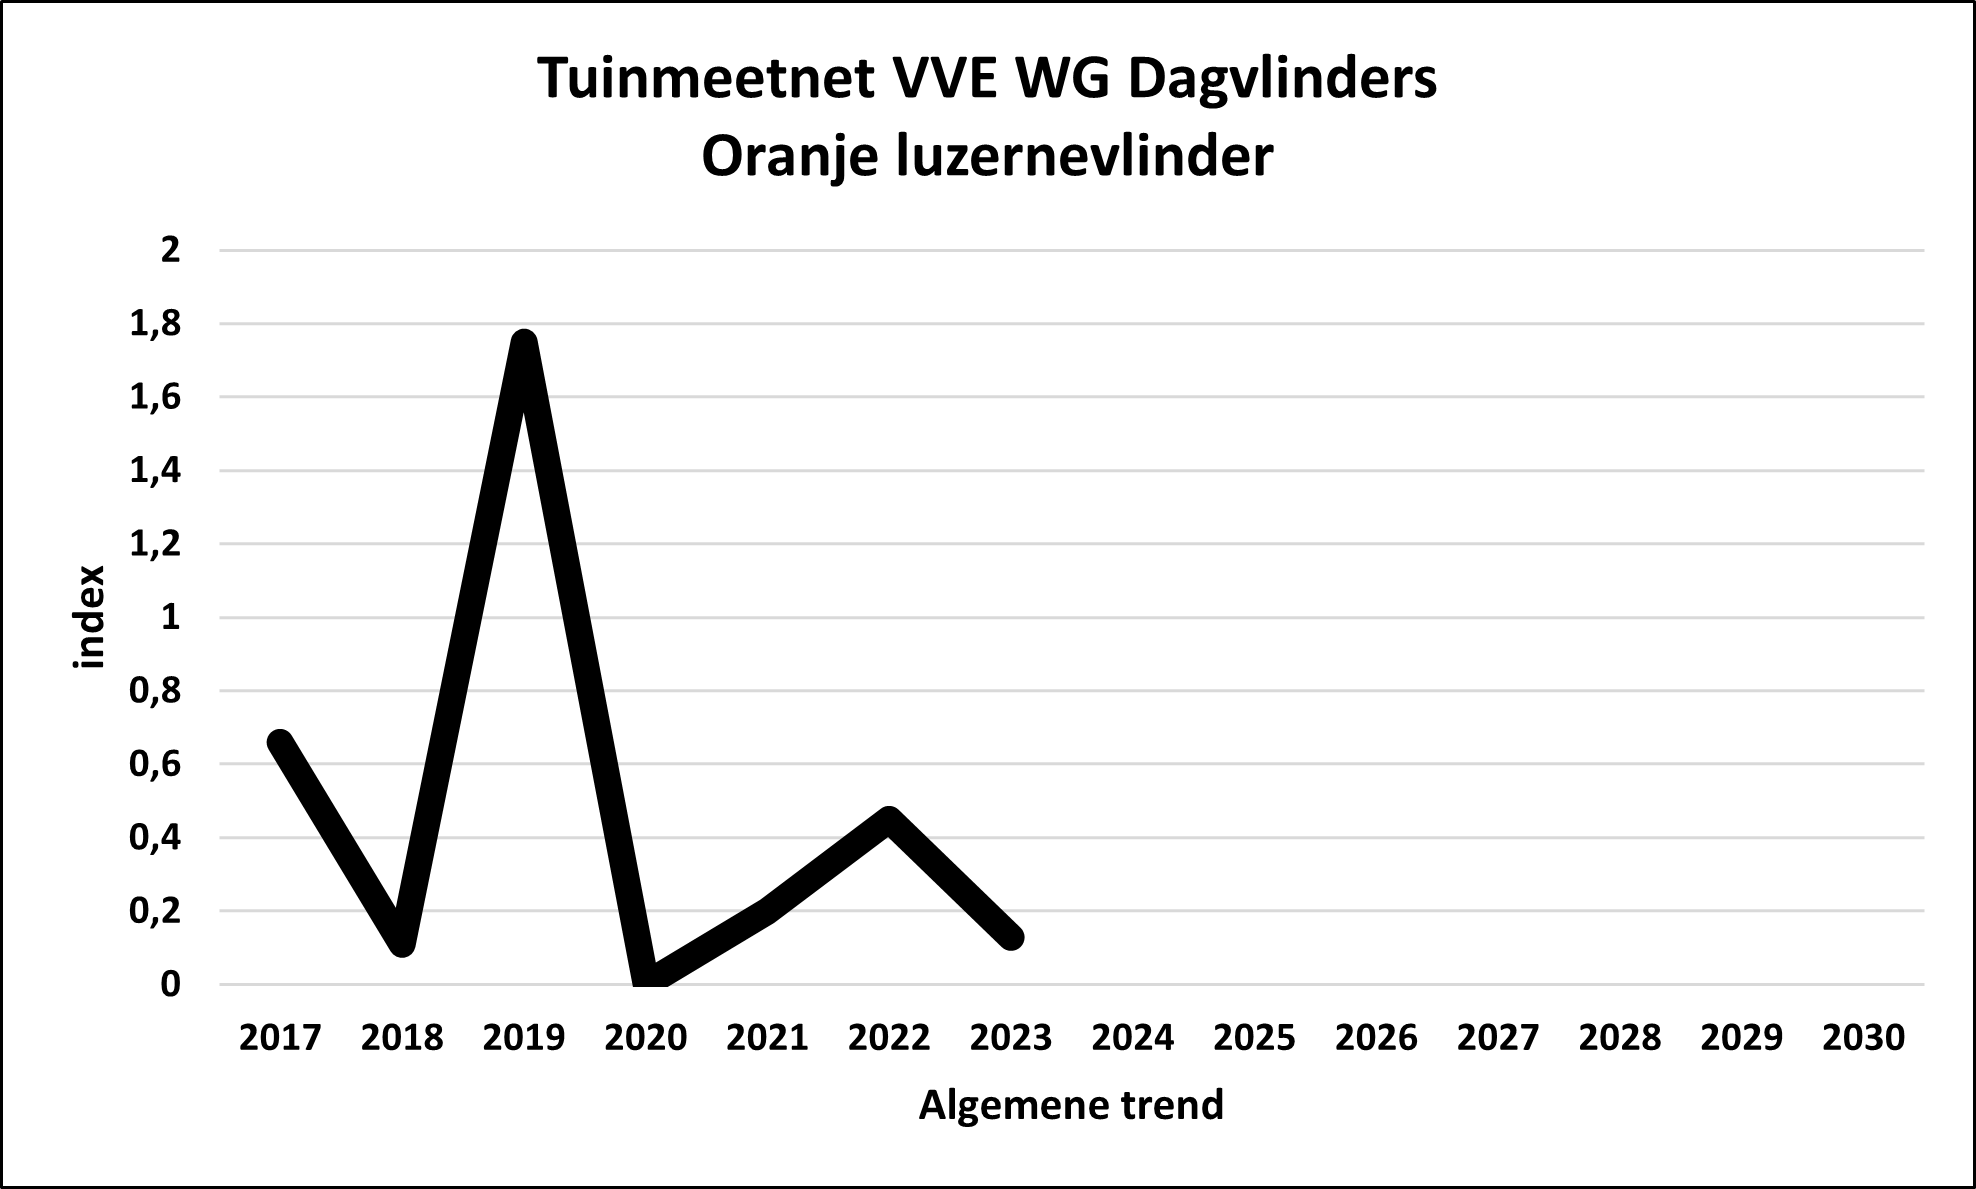 Algemene trend
                                                Oranje luzernevlinder
                                                Tuinmeetnet, Overall
                                                trend Moorland clouded
                                                yellow Garden monitoring
                                                network